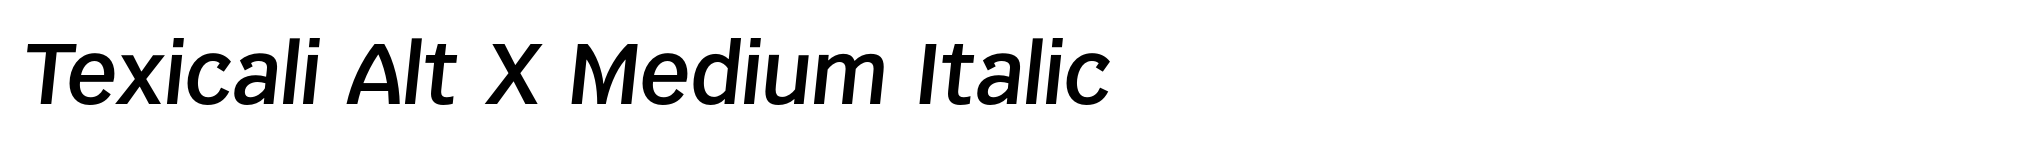 Texicali Alt X Medium Italic image